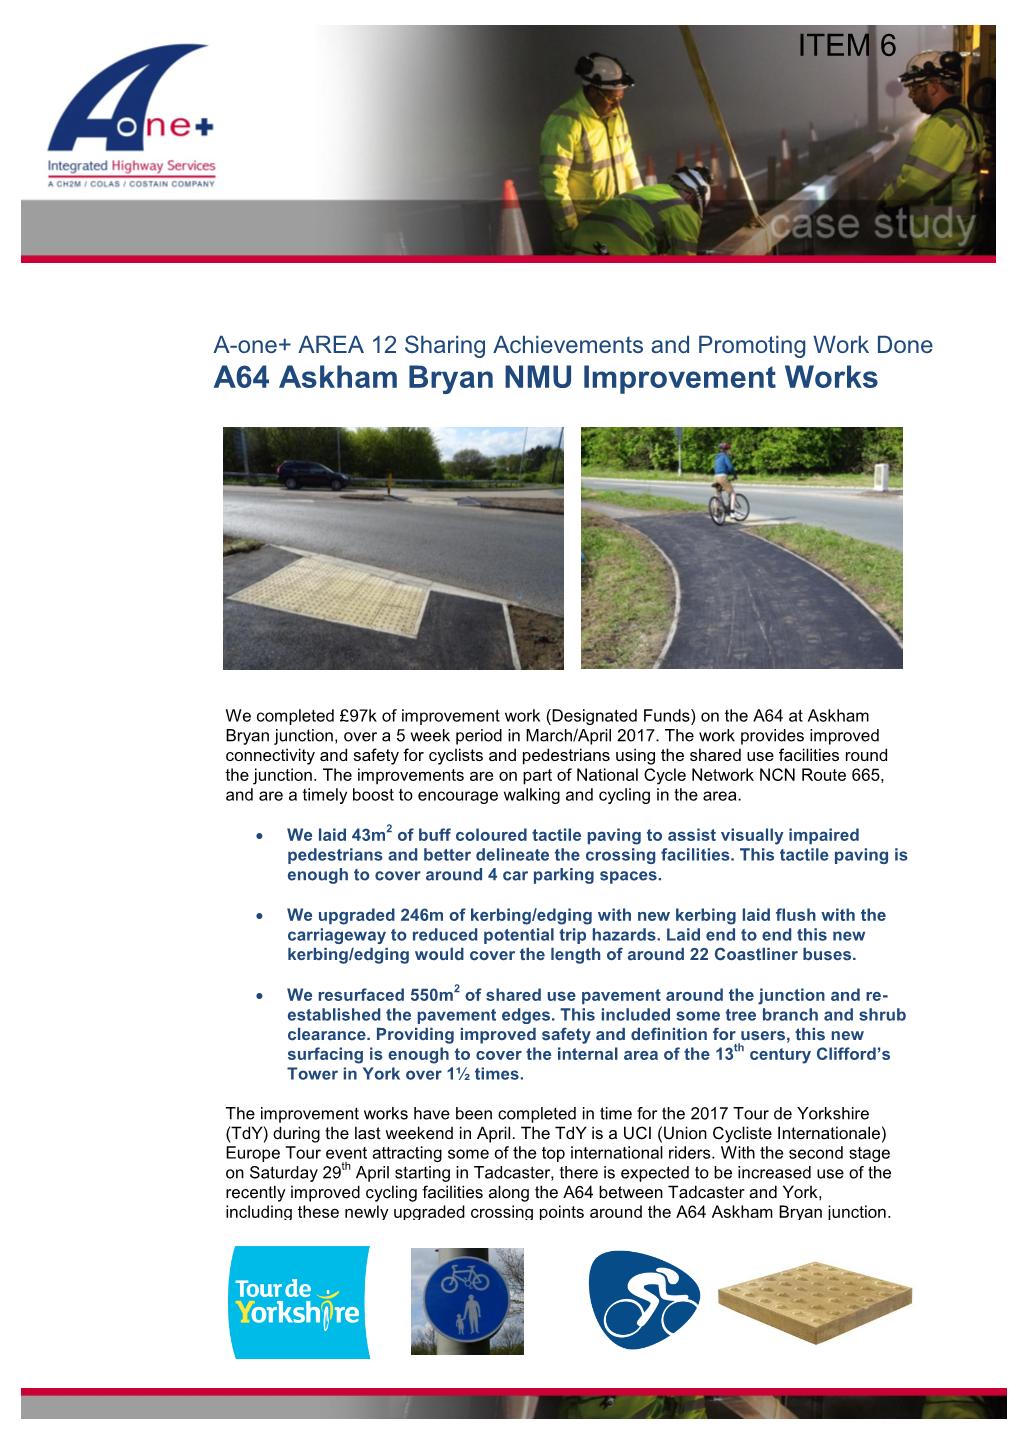 A64 Askham Bryan NMU Improvement Works ITEM 6